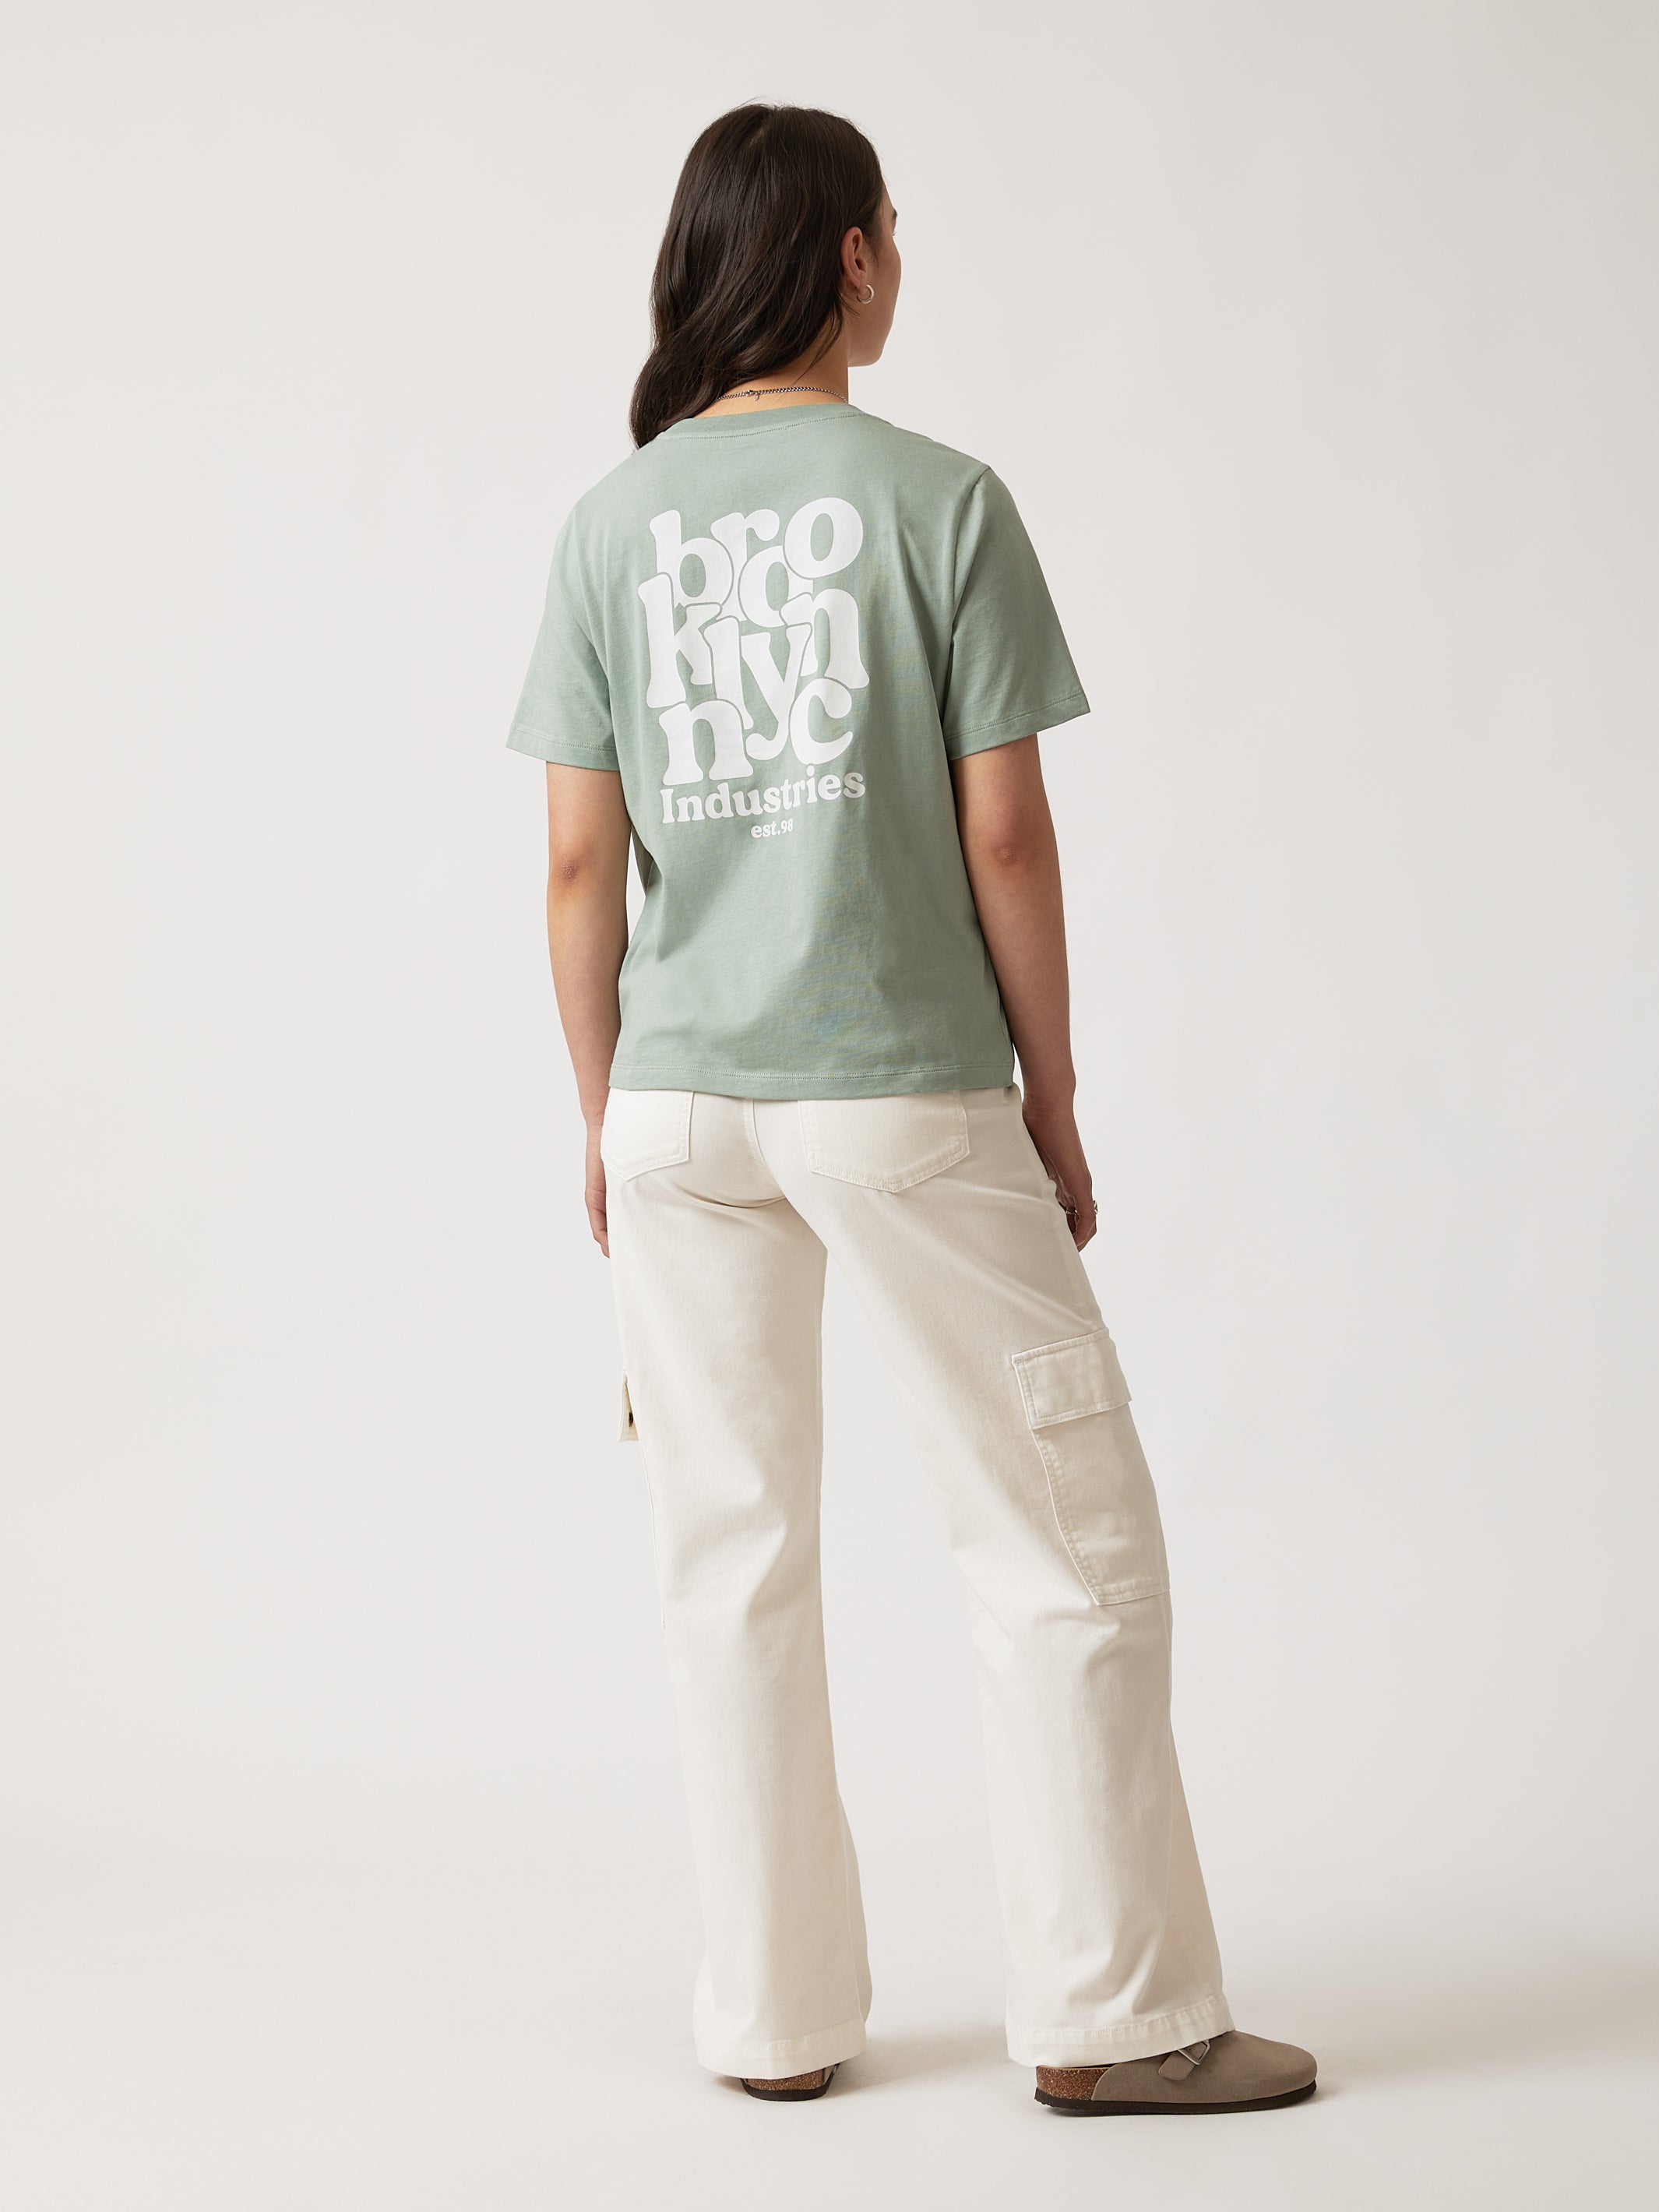 Women's NYC T-shirt in Green Milieu - BROOKLYN INDUSTRIES